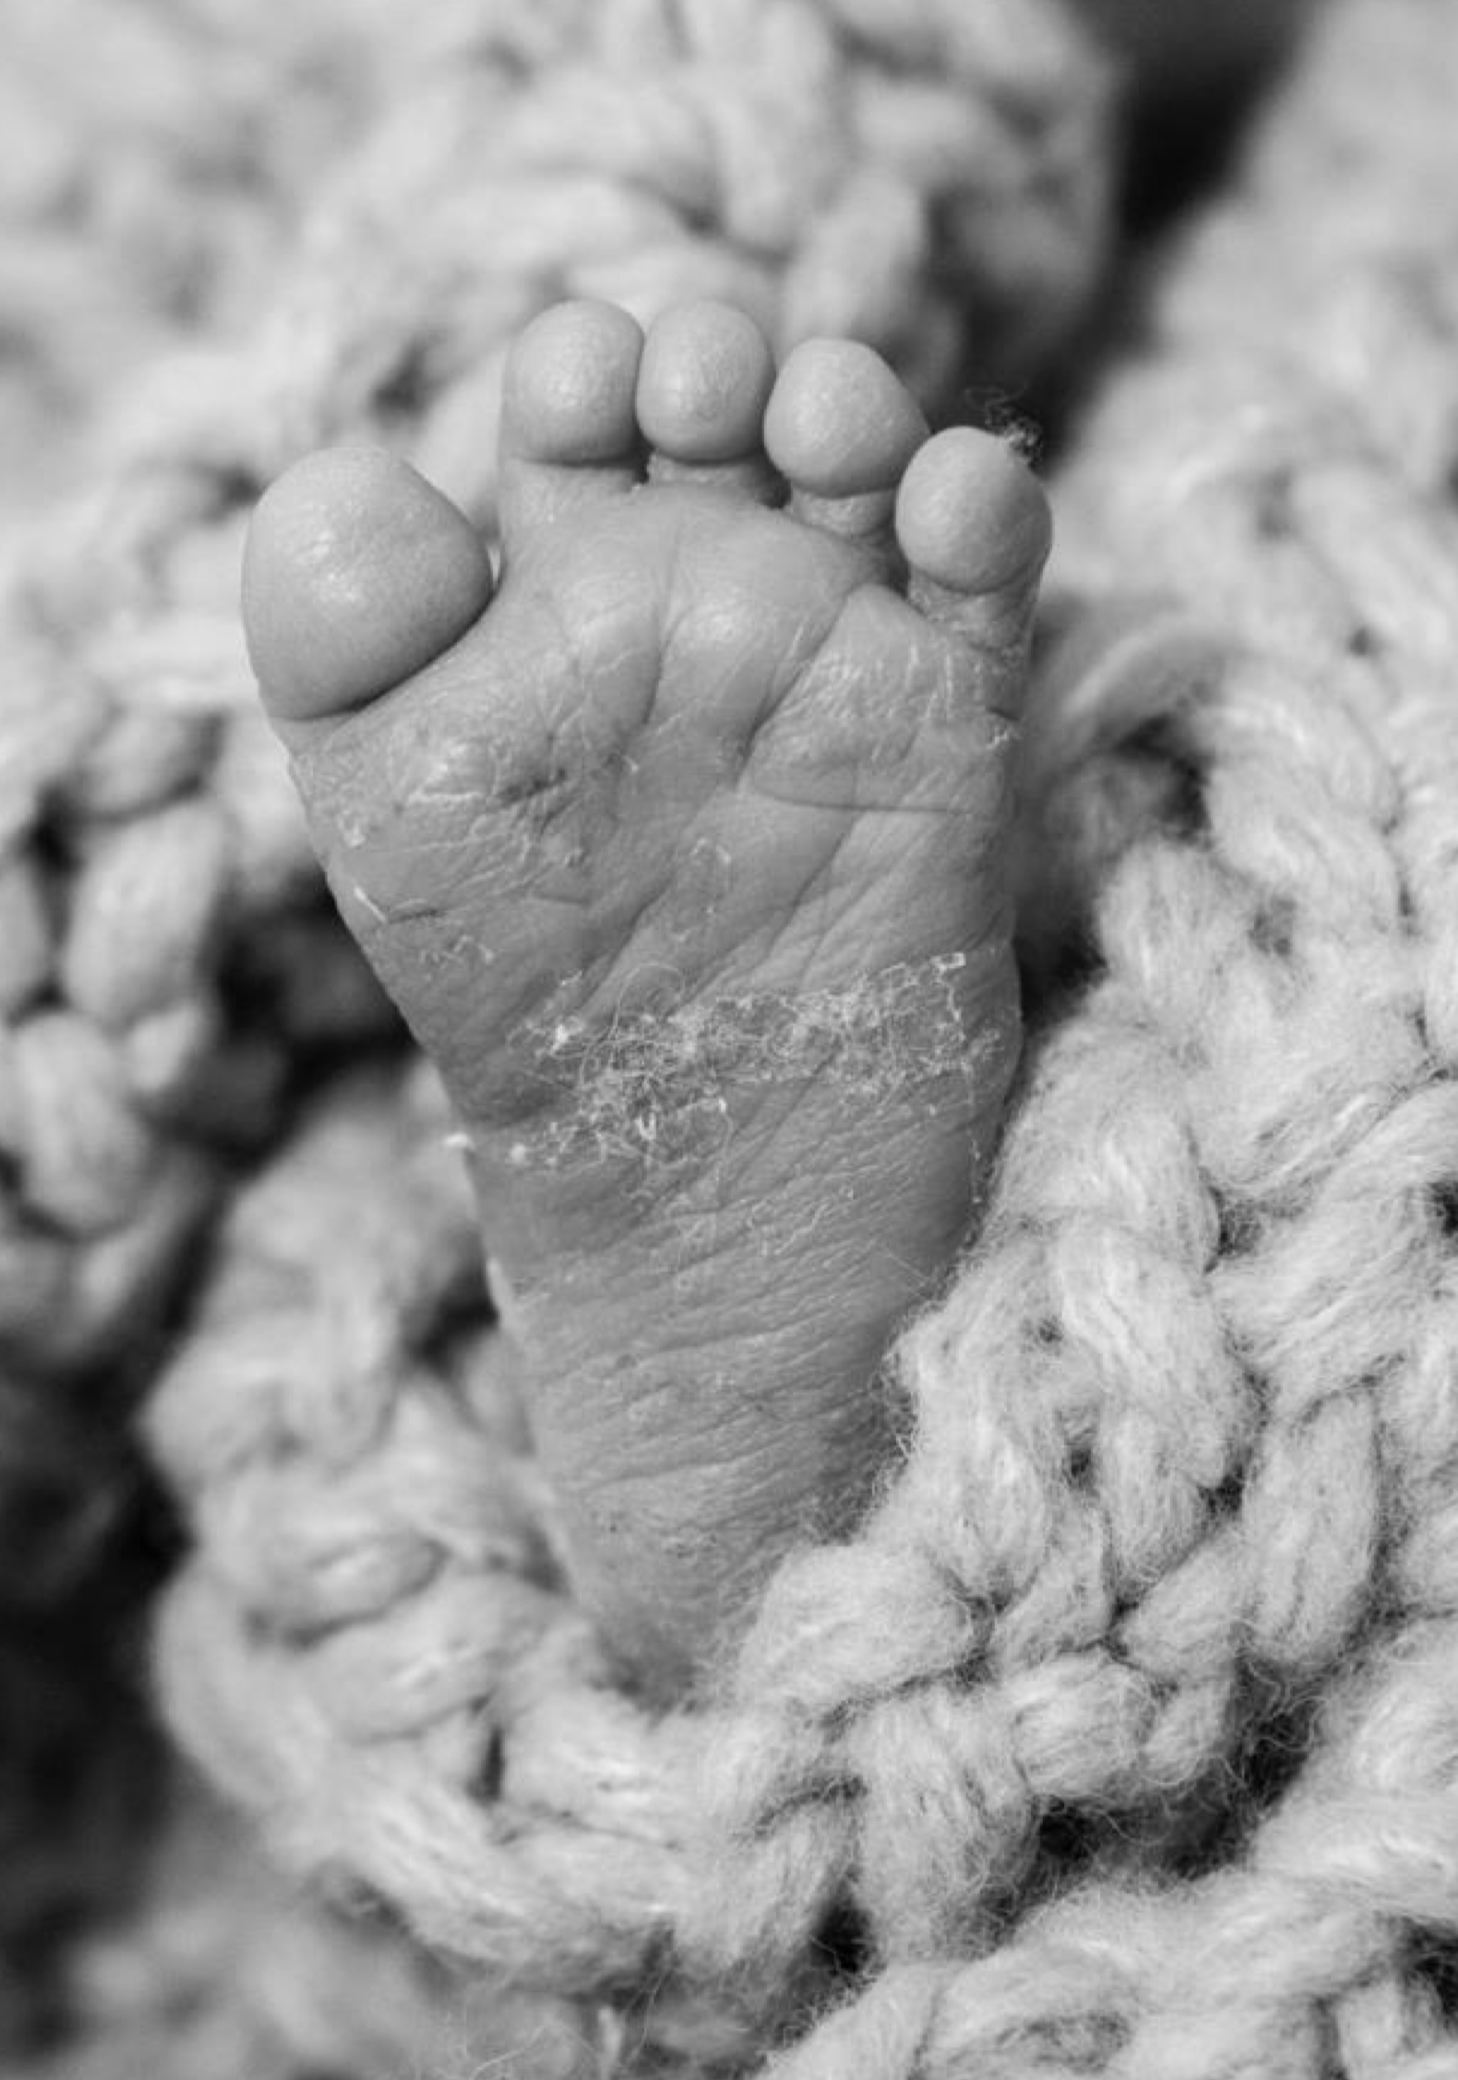 Infant's foot